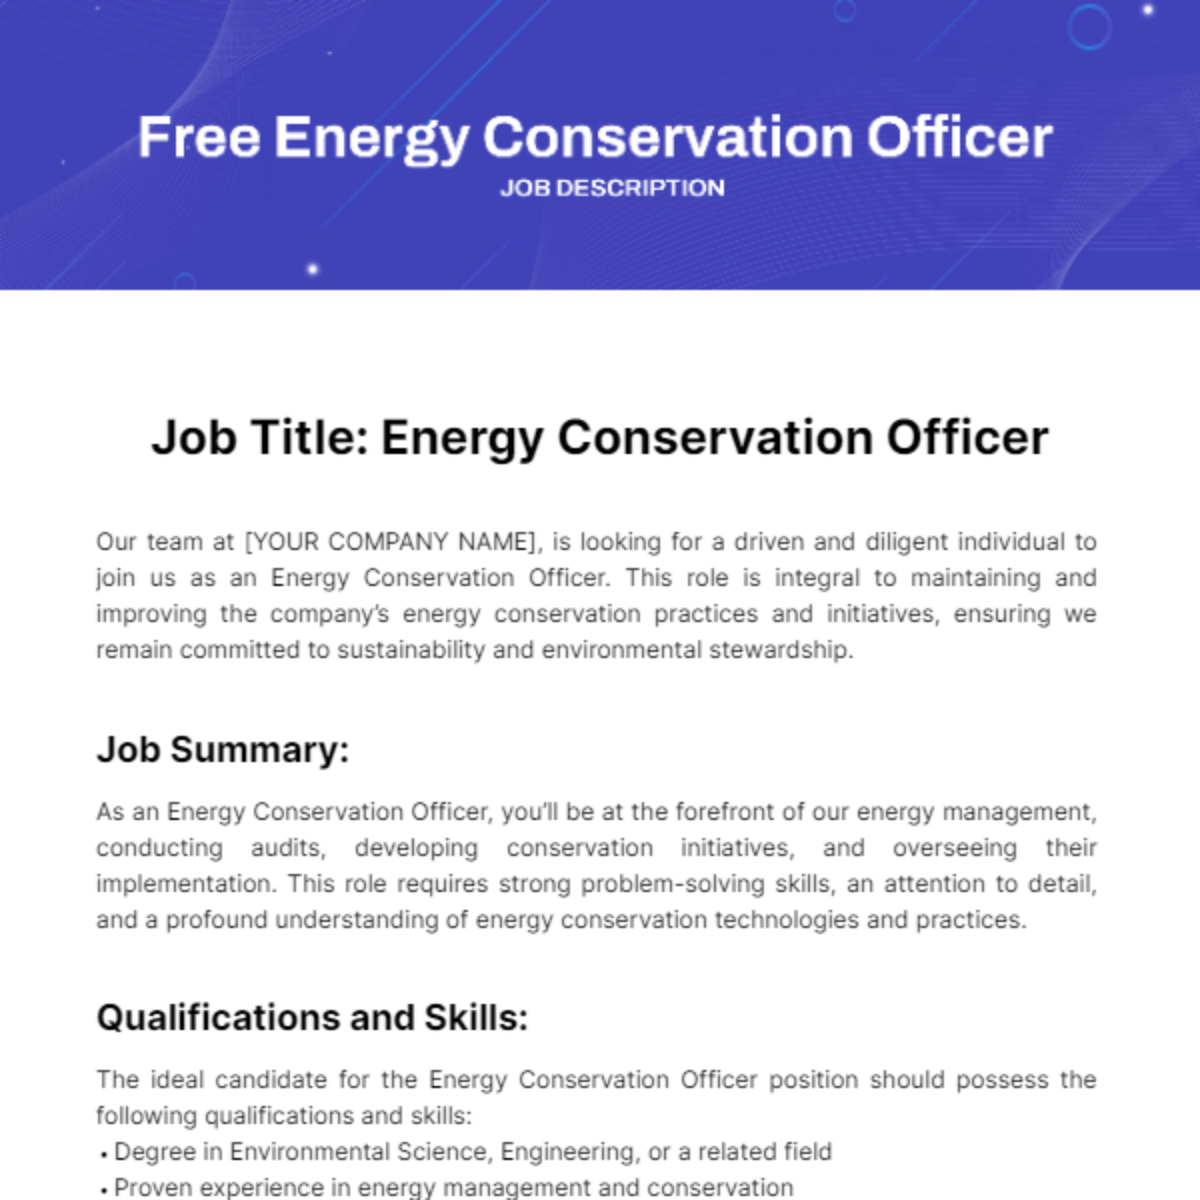 Free Energy Conservation Officer Job Description Template